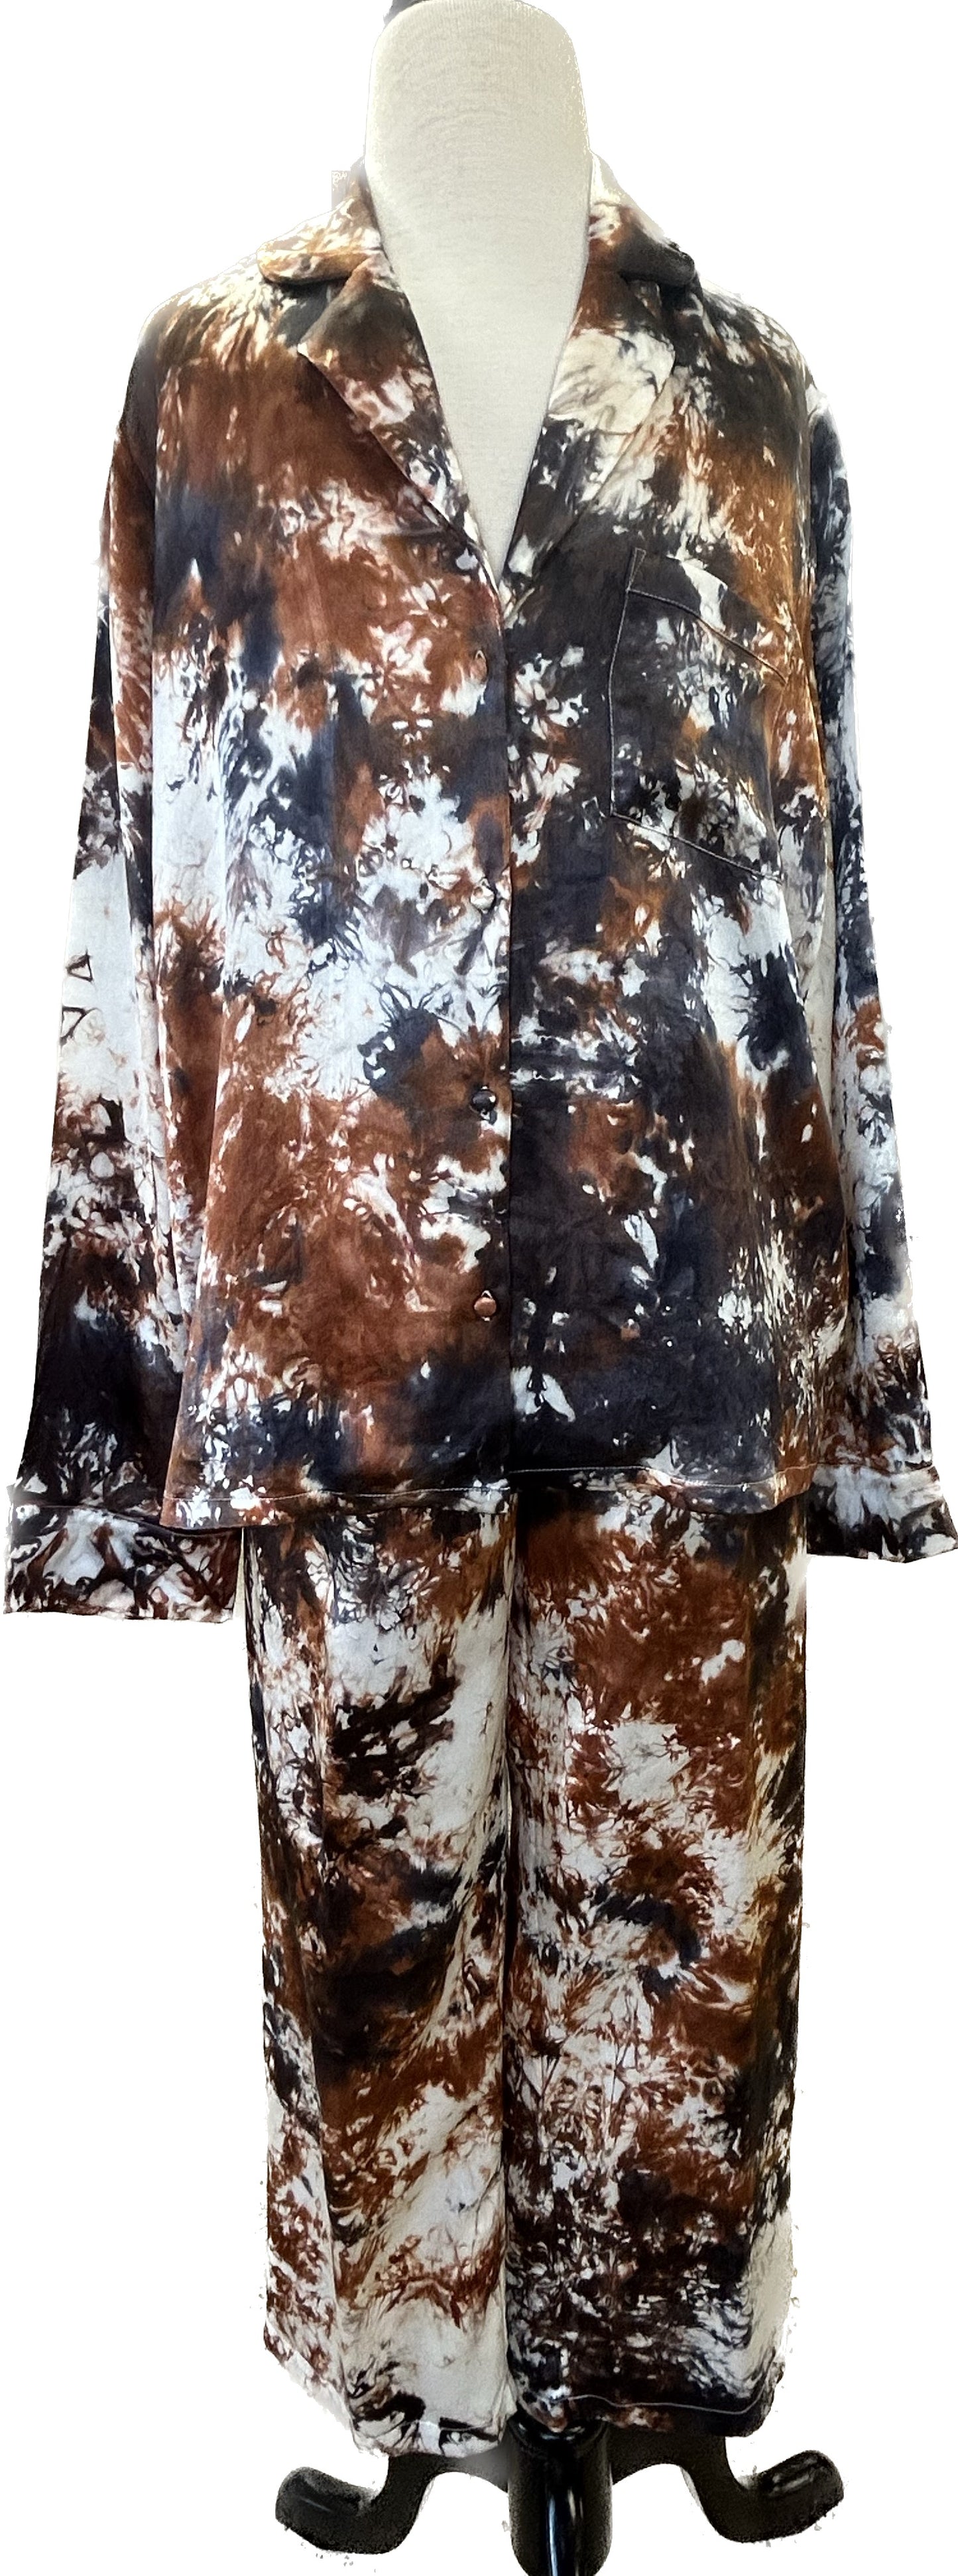 100% Silk Pajamas- "Rust & Black Marbled"